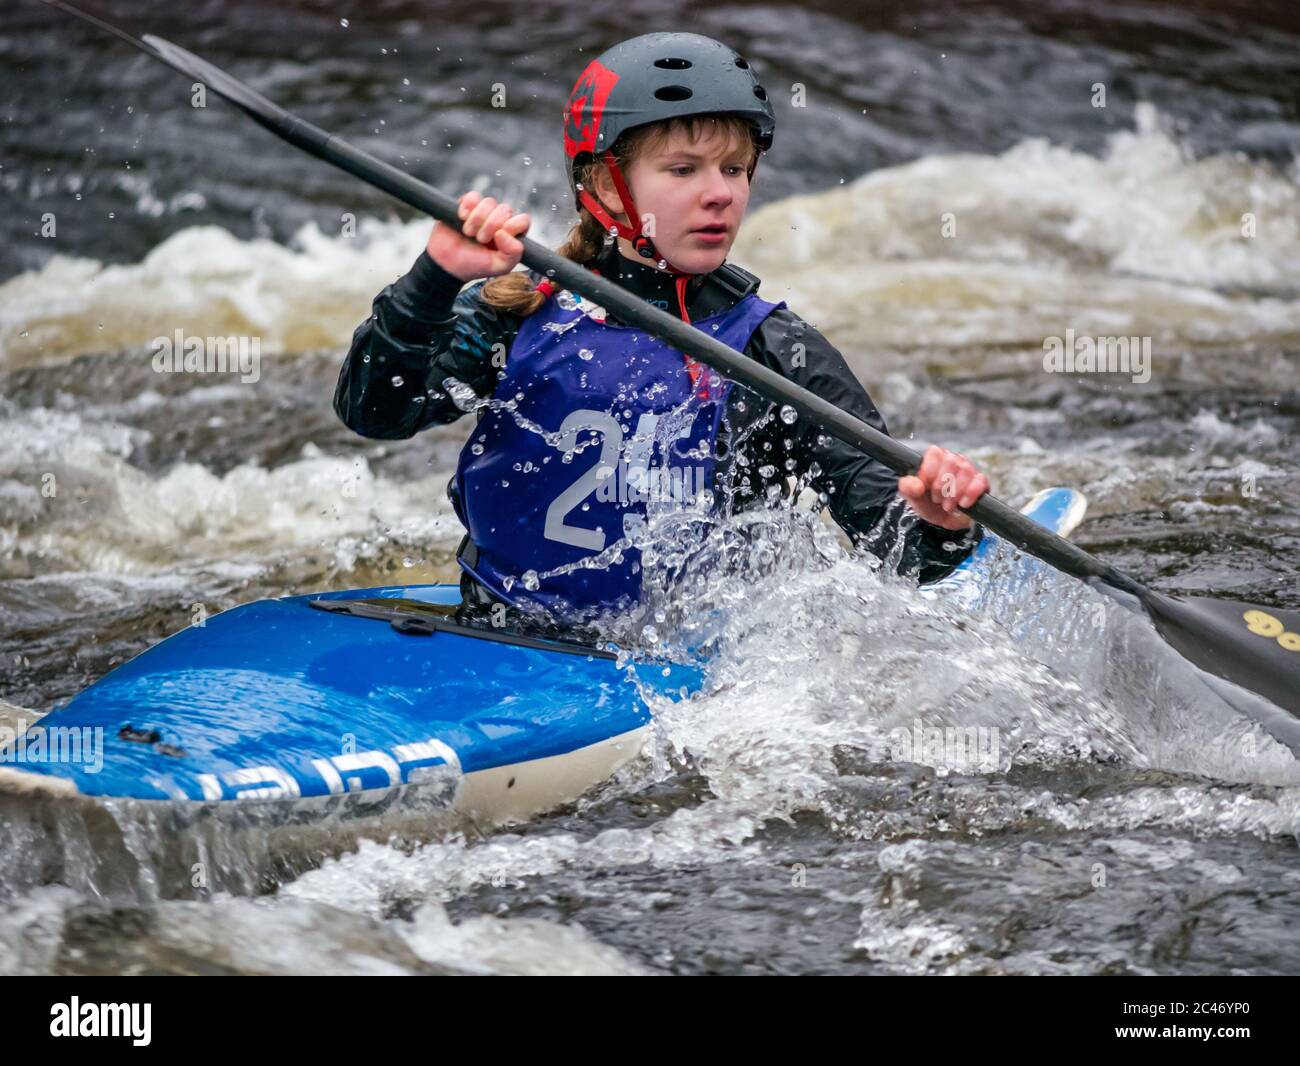 Premier Canoe Slalom: Jessie Anderson vom Breadalbane Canoe Club tritt im K1 auf dem Fluss Tay, Grandtully, Perthshire, Schottland, Großbritannien an Stockfoto